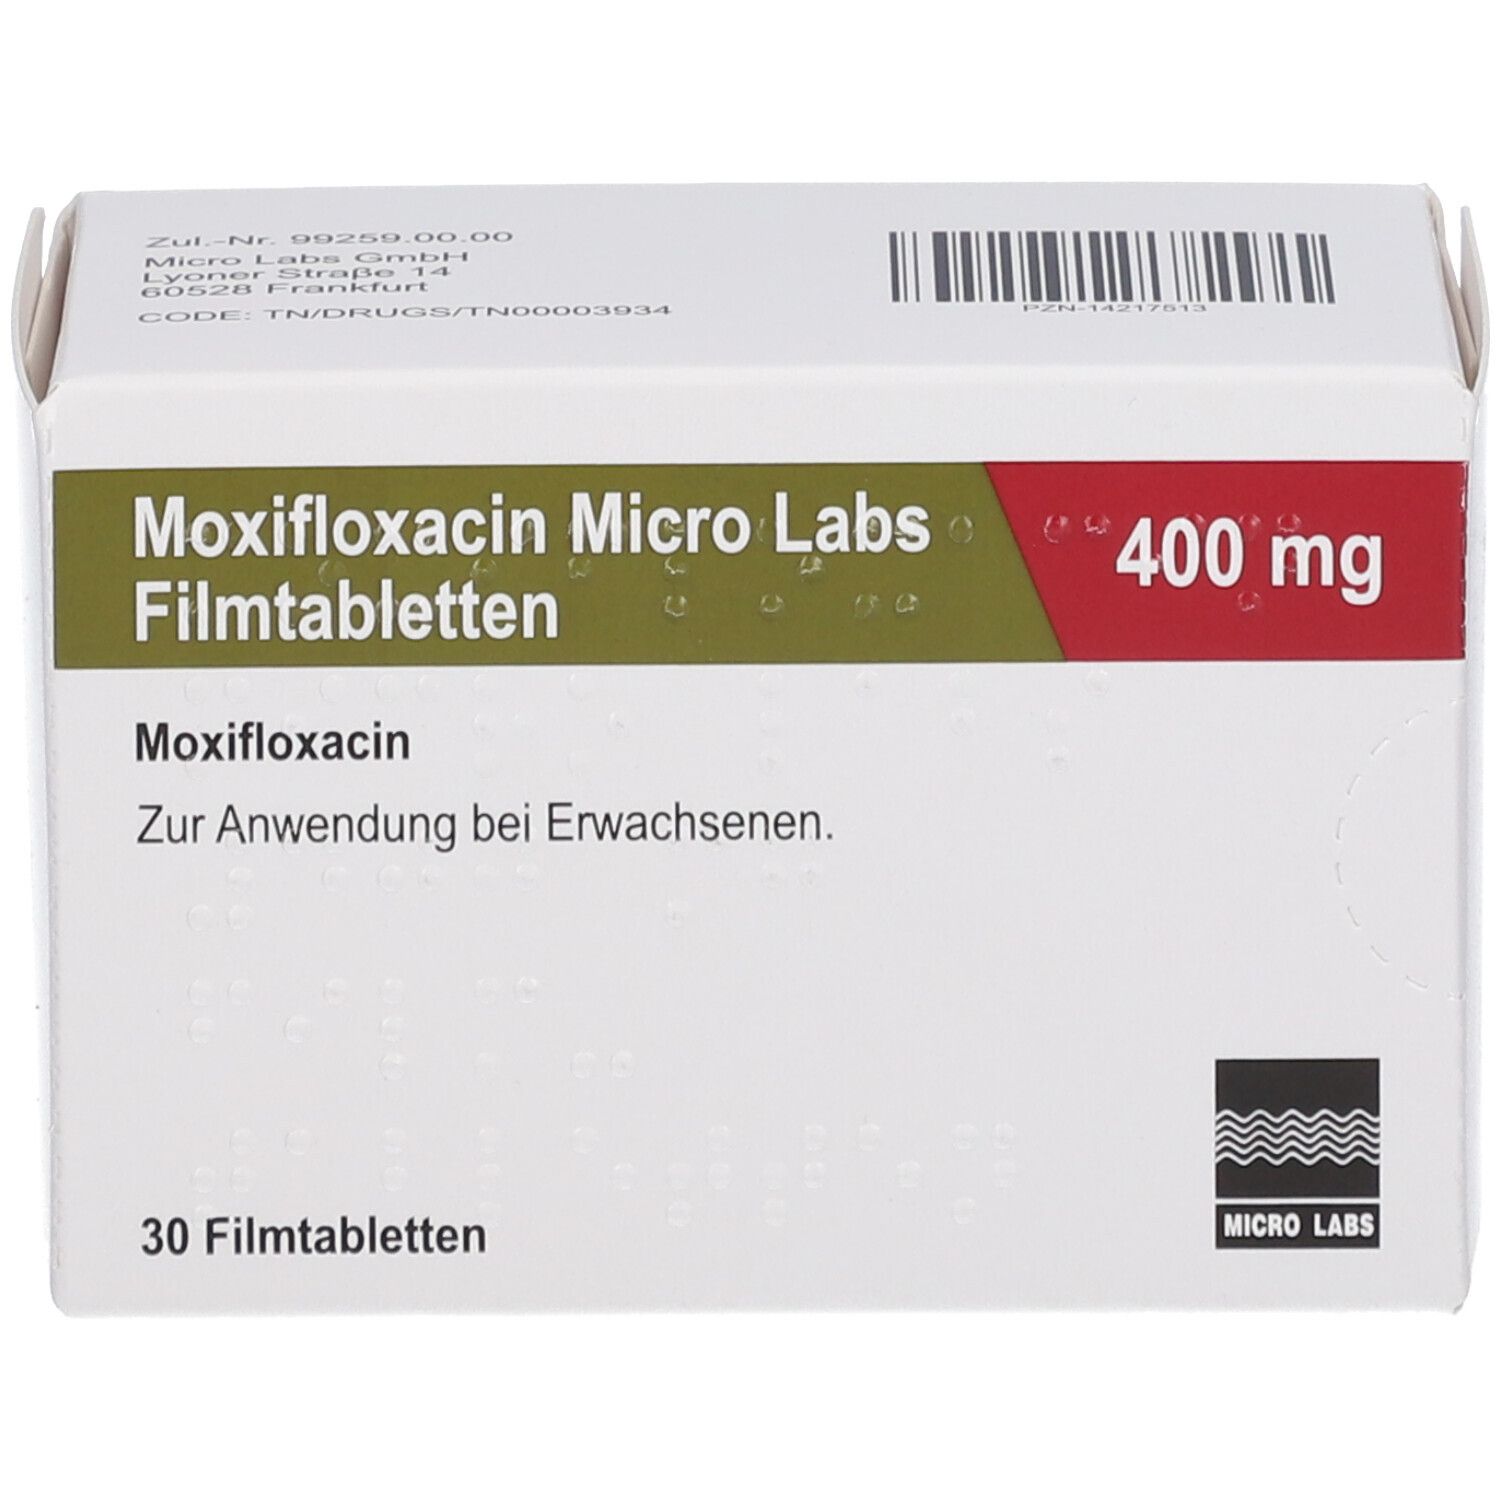 Moxifloxacin Micro Labs 400 mg